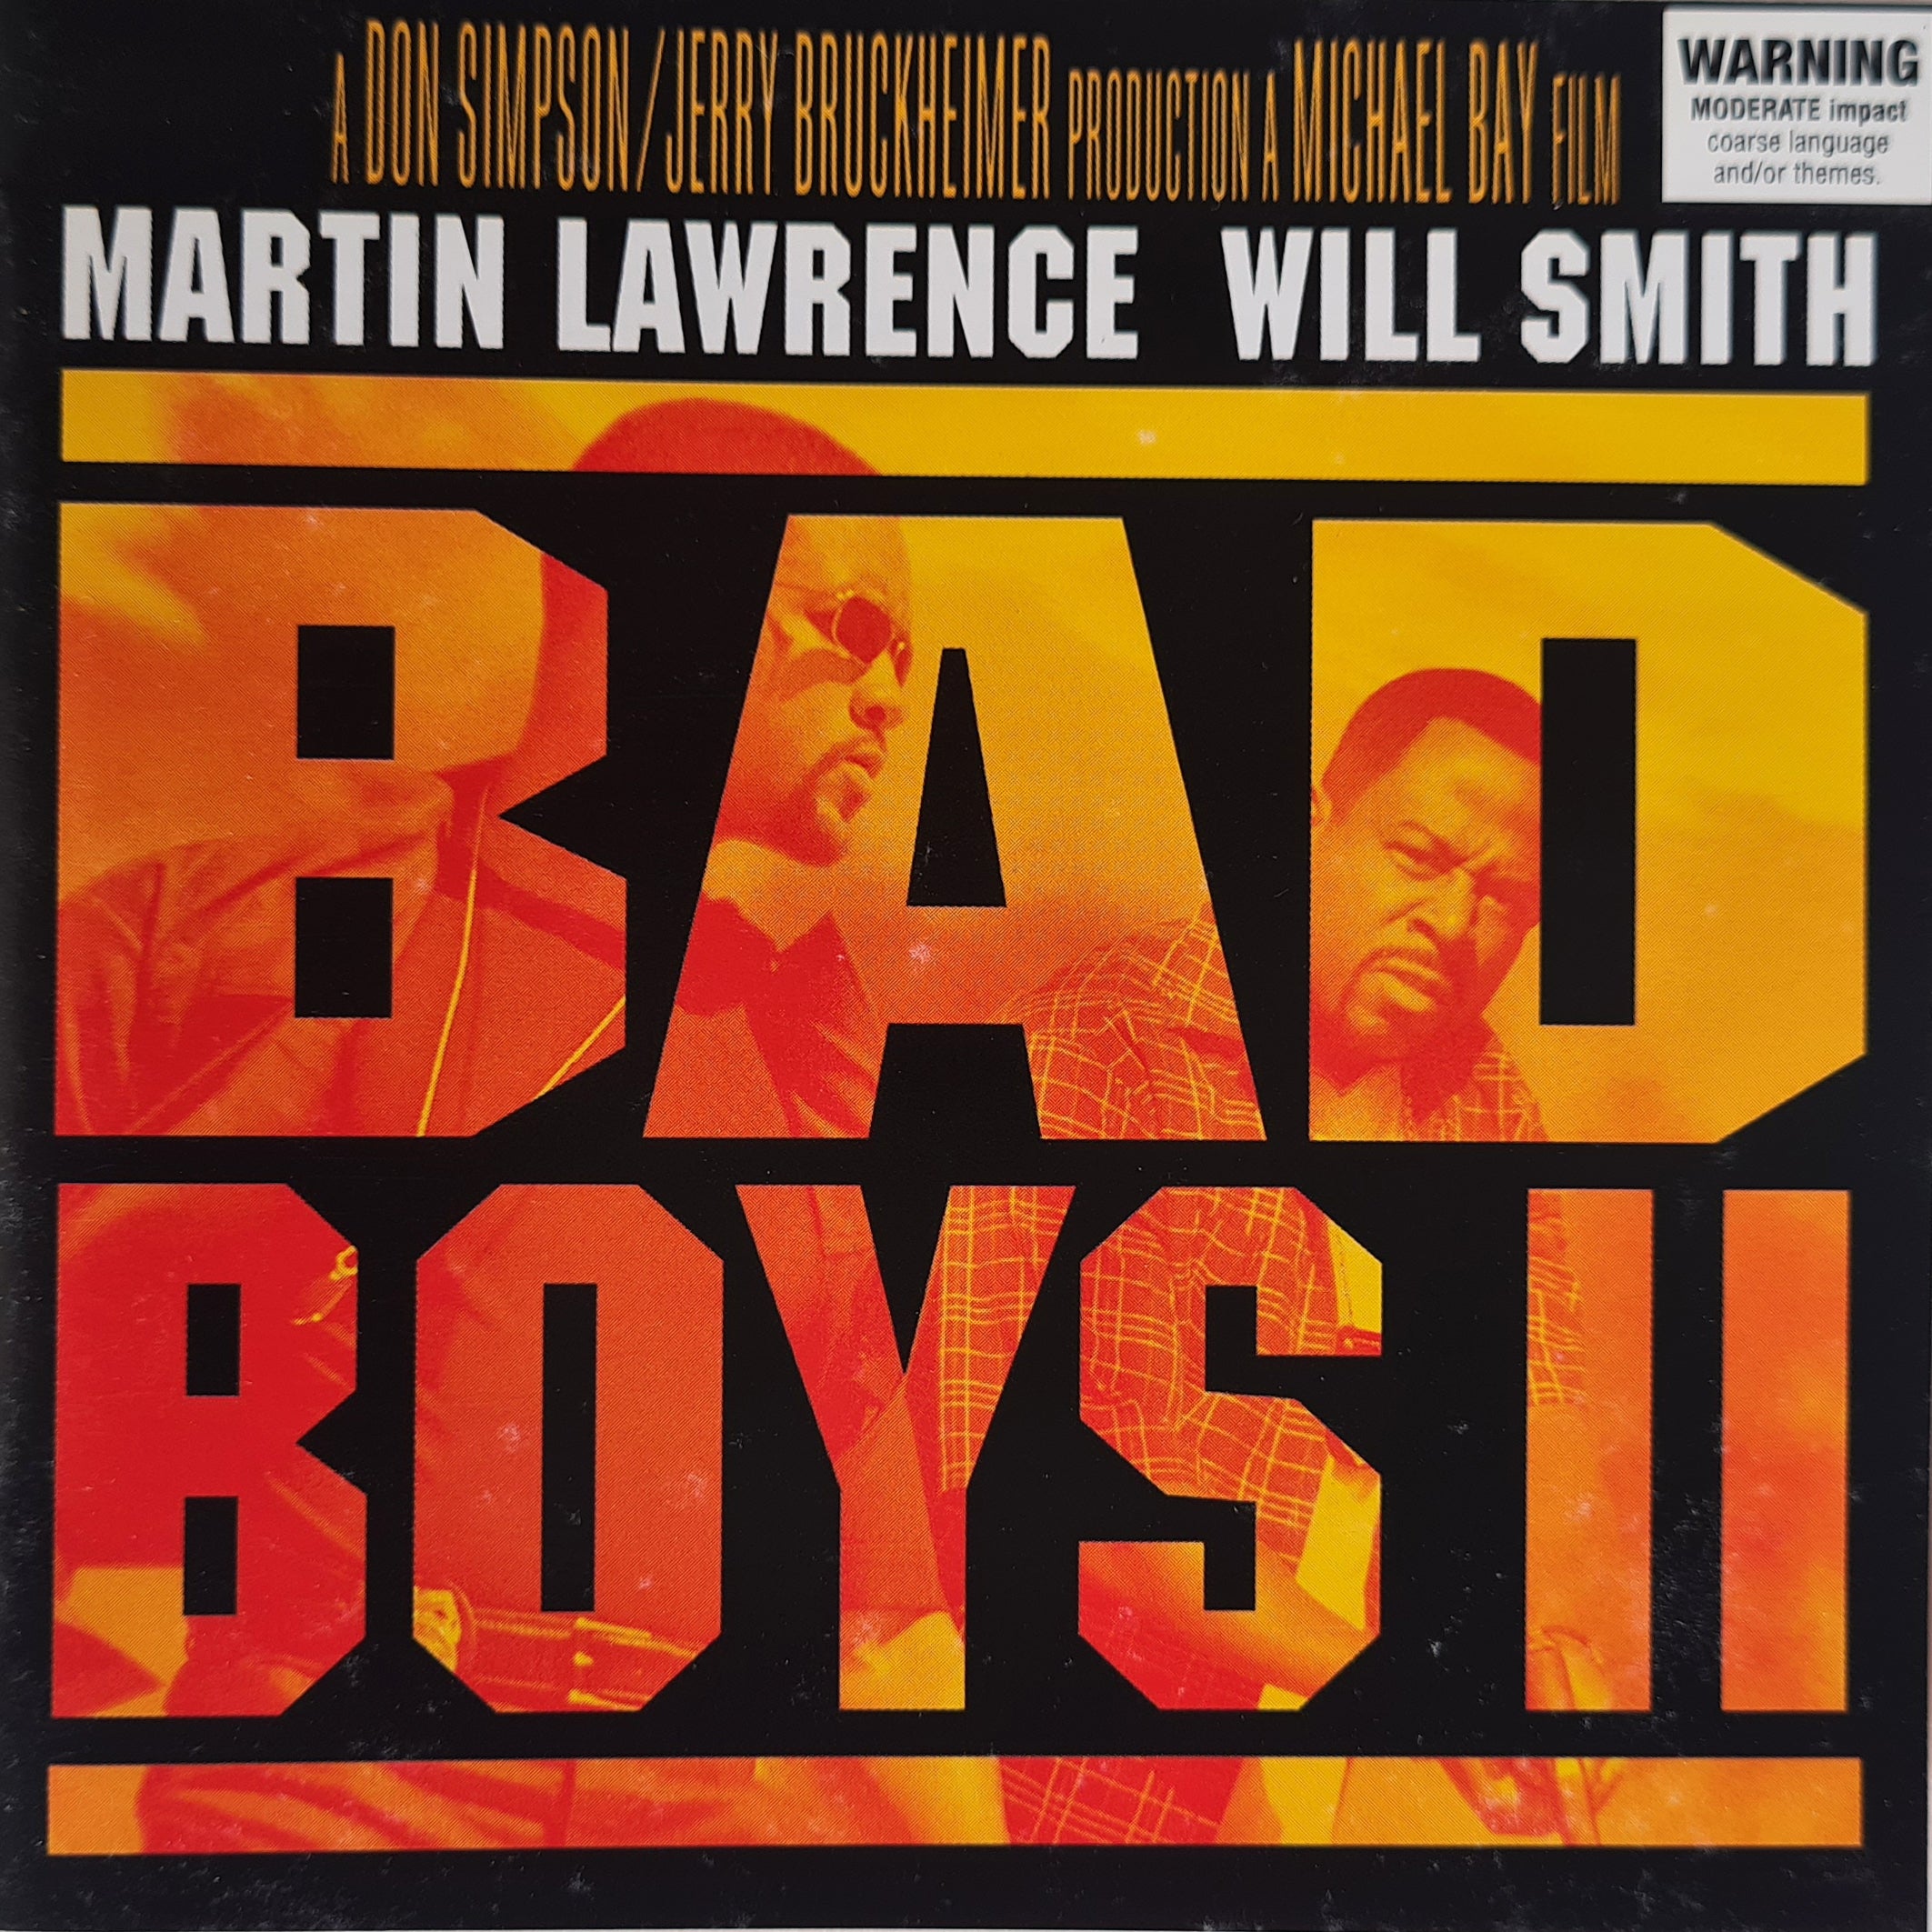 Bad Boys II - The Soundtrack (CD)